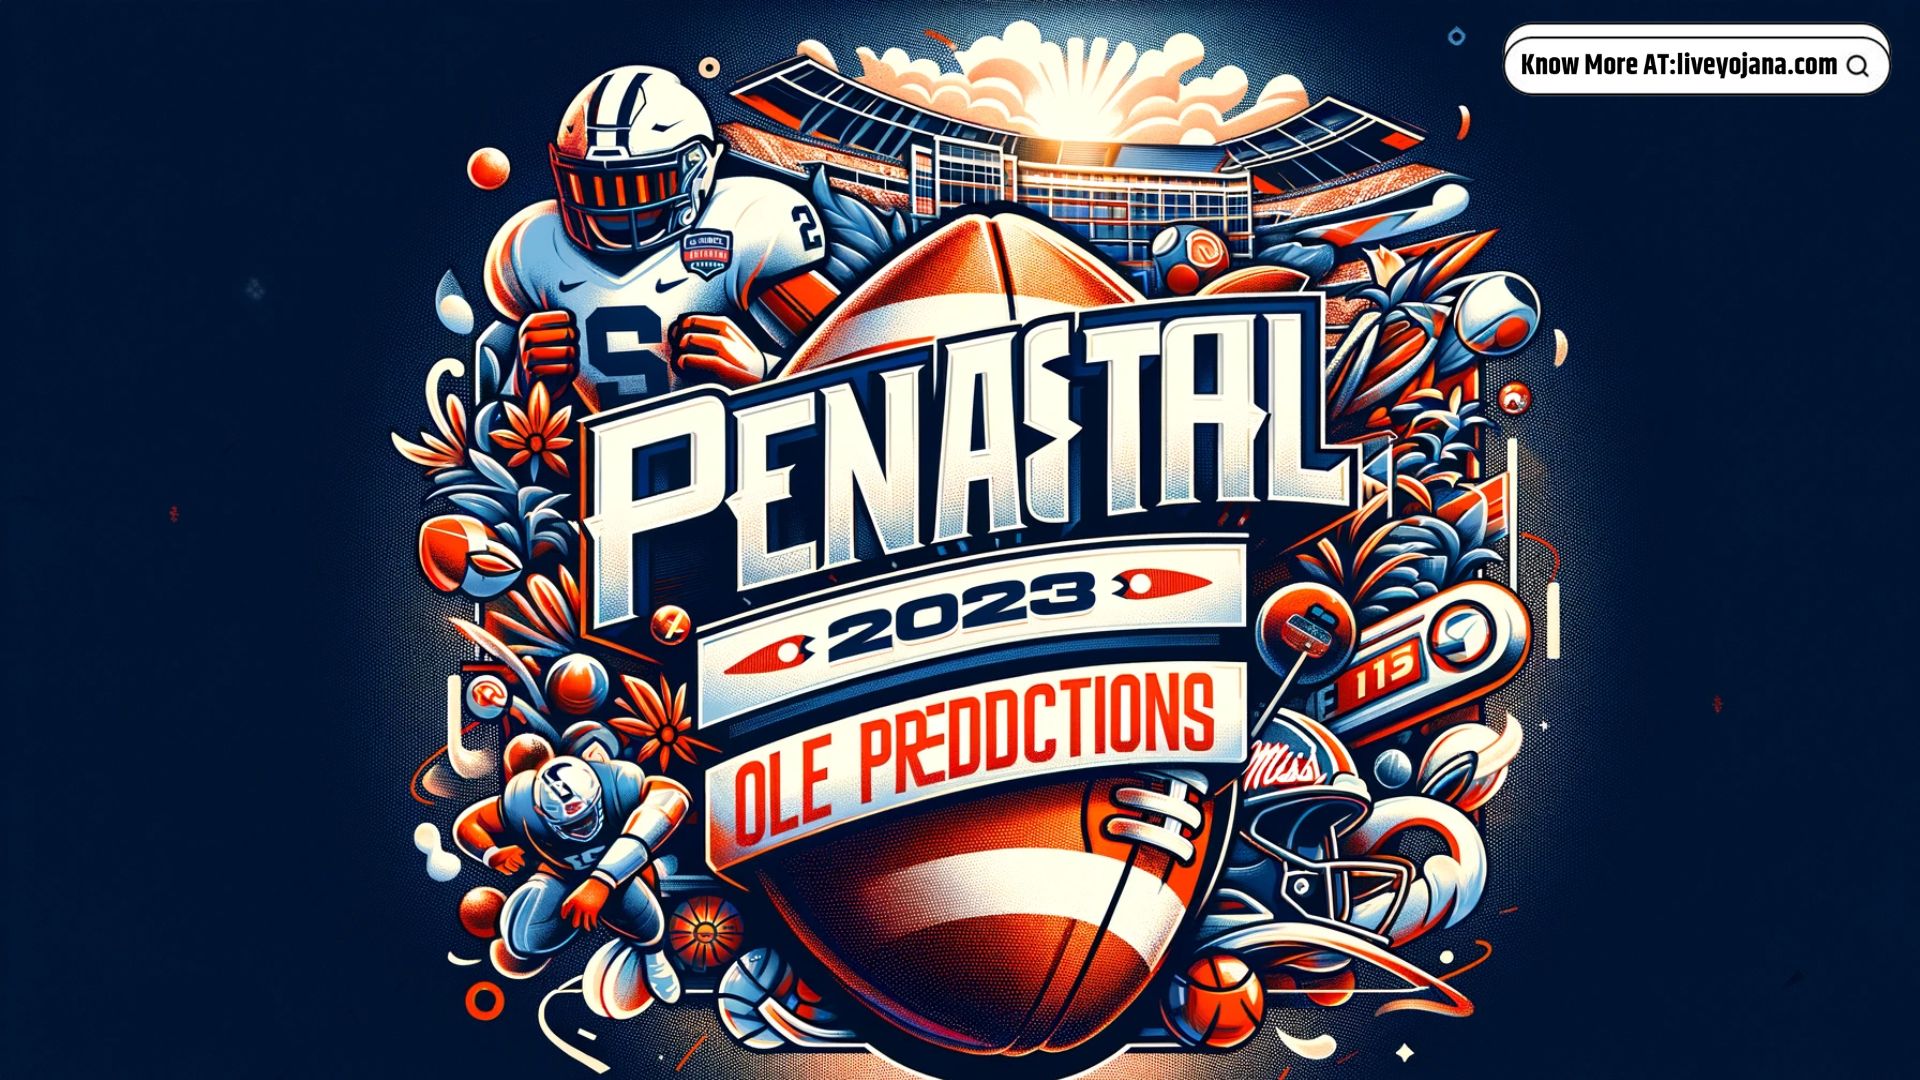  Penn State vs. Ole Miss Predictions Peach Bowl 2023 Mississippi Clarion-Ledger  Penn State Nittany Lions Penn State vs. Ole Miss Predictions